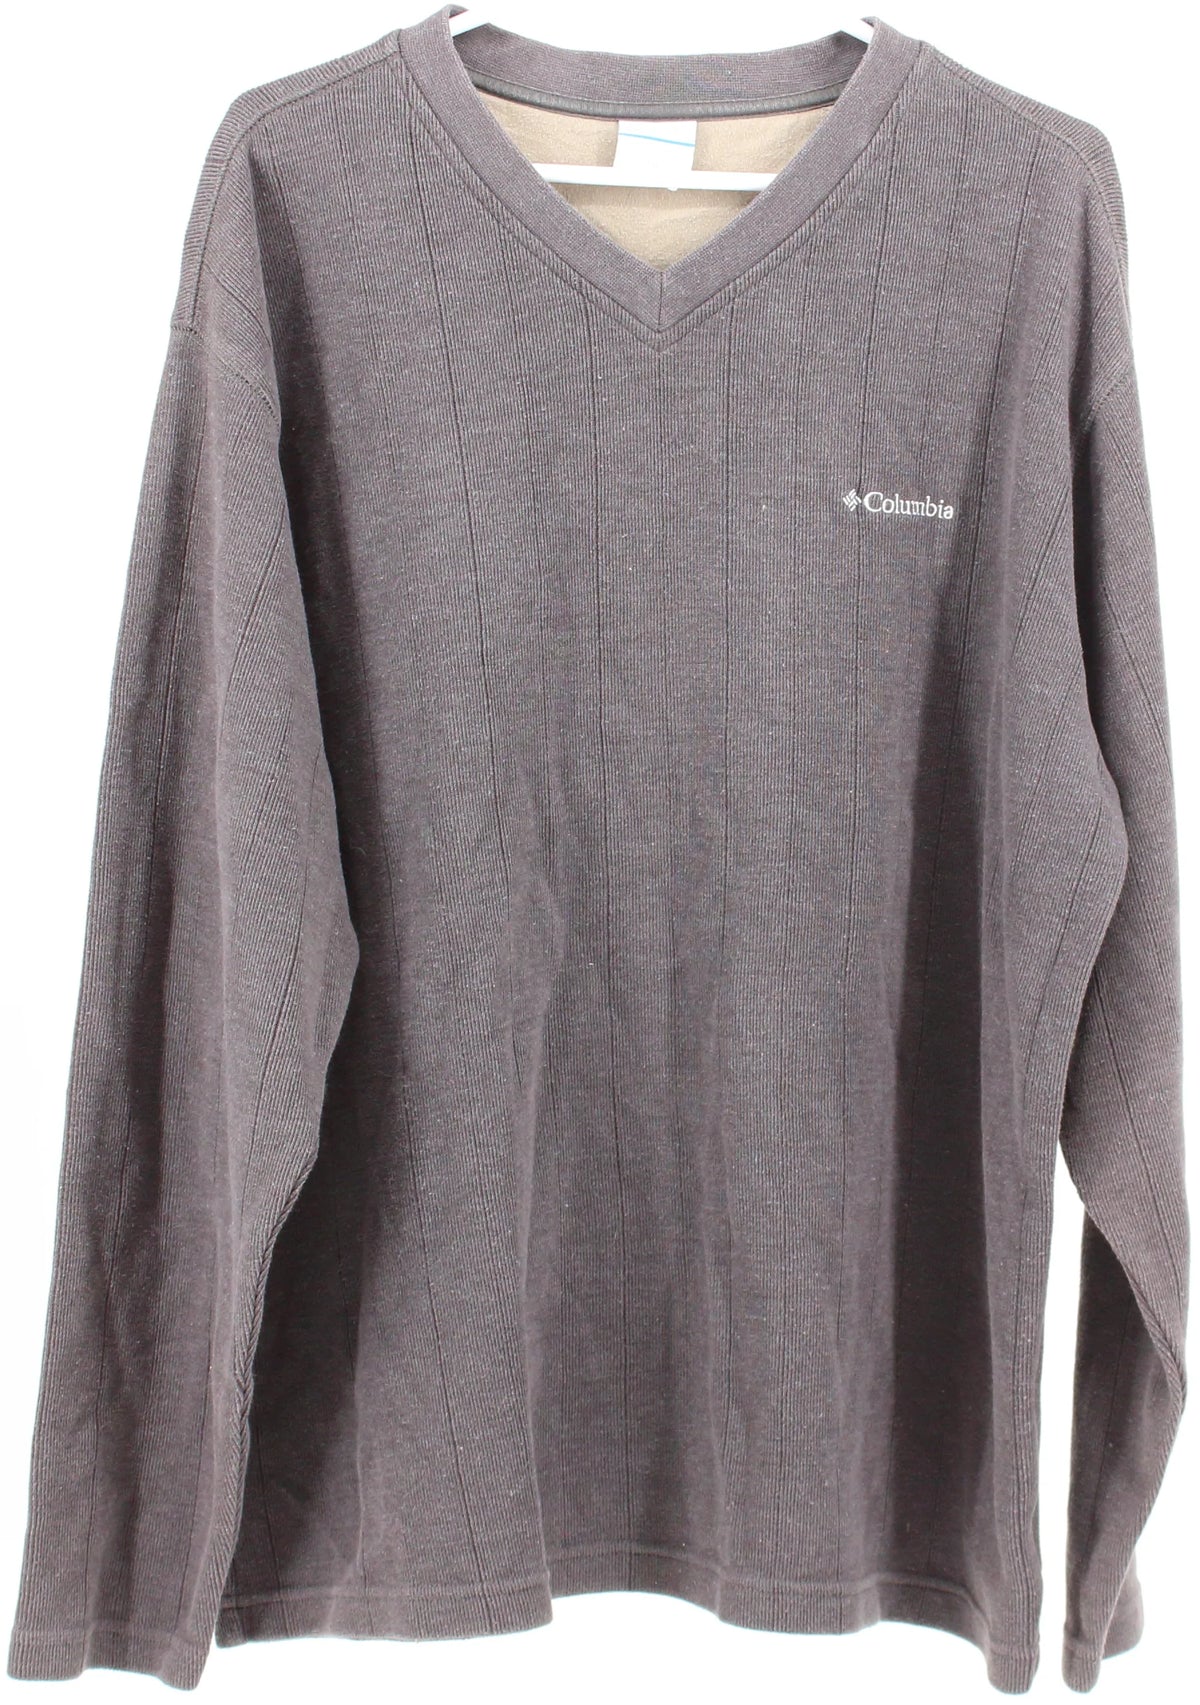 Columbia Grey V Neck Sweater